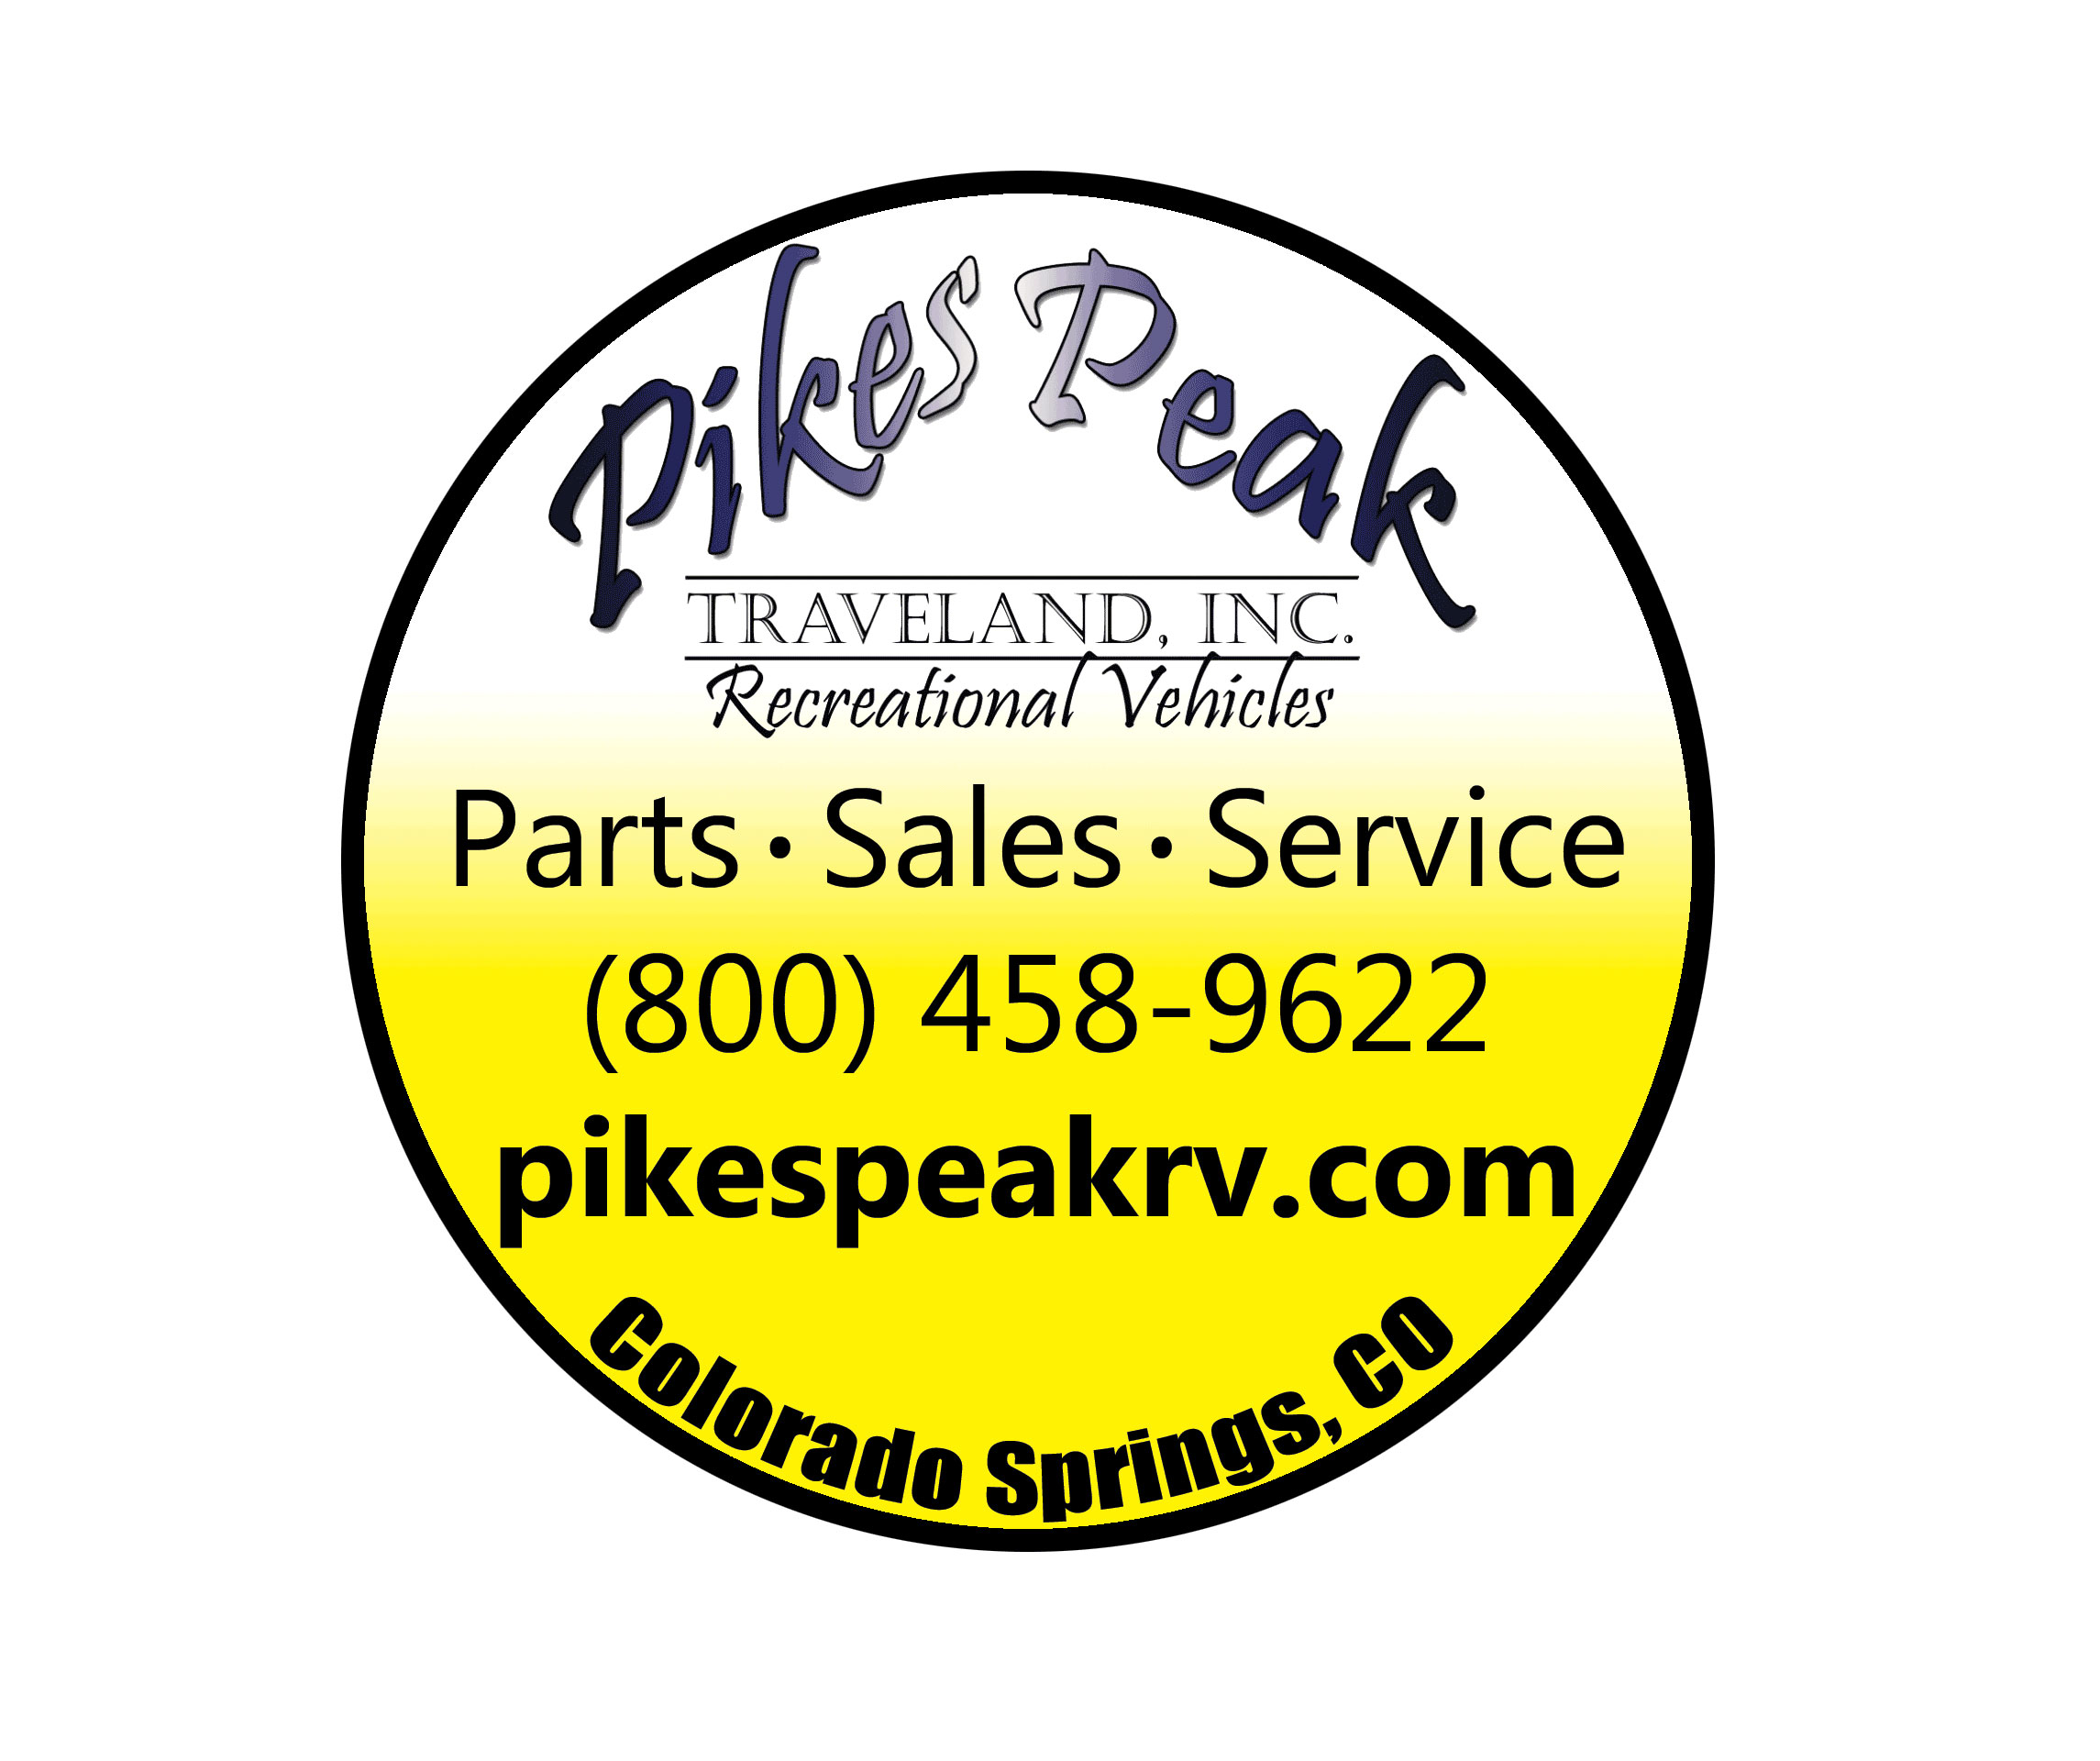 Pikes Peak Traveland Blog